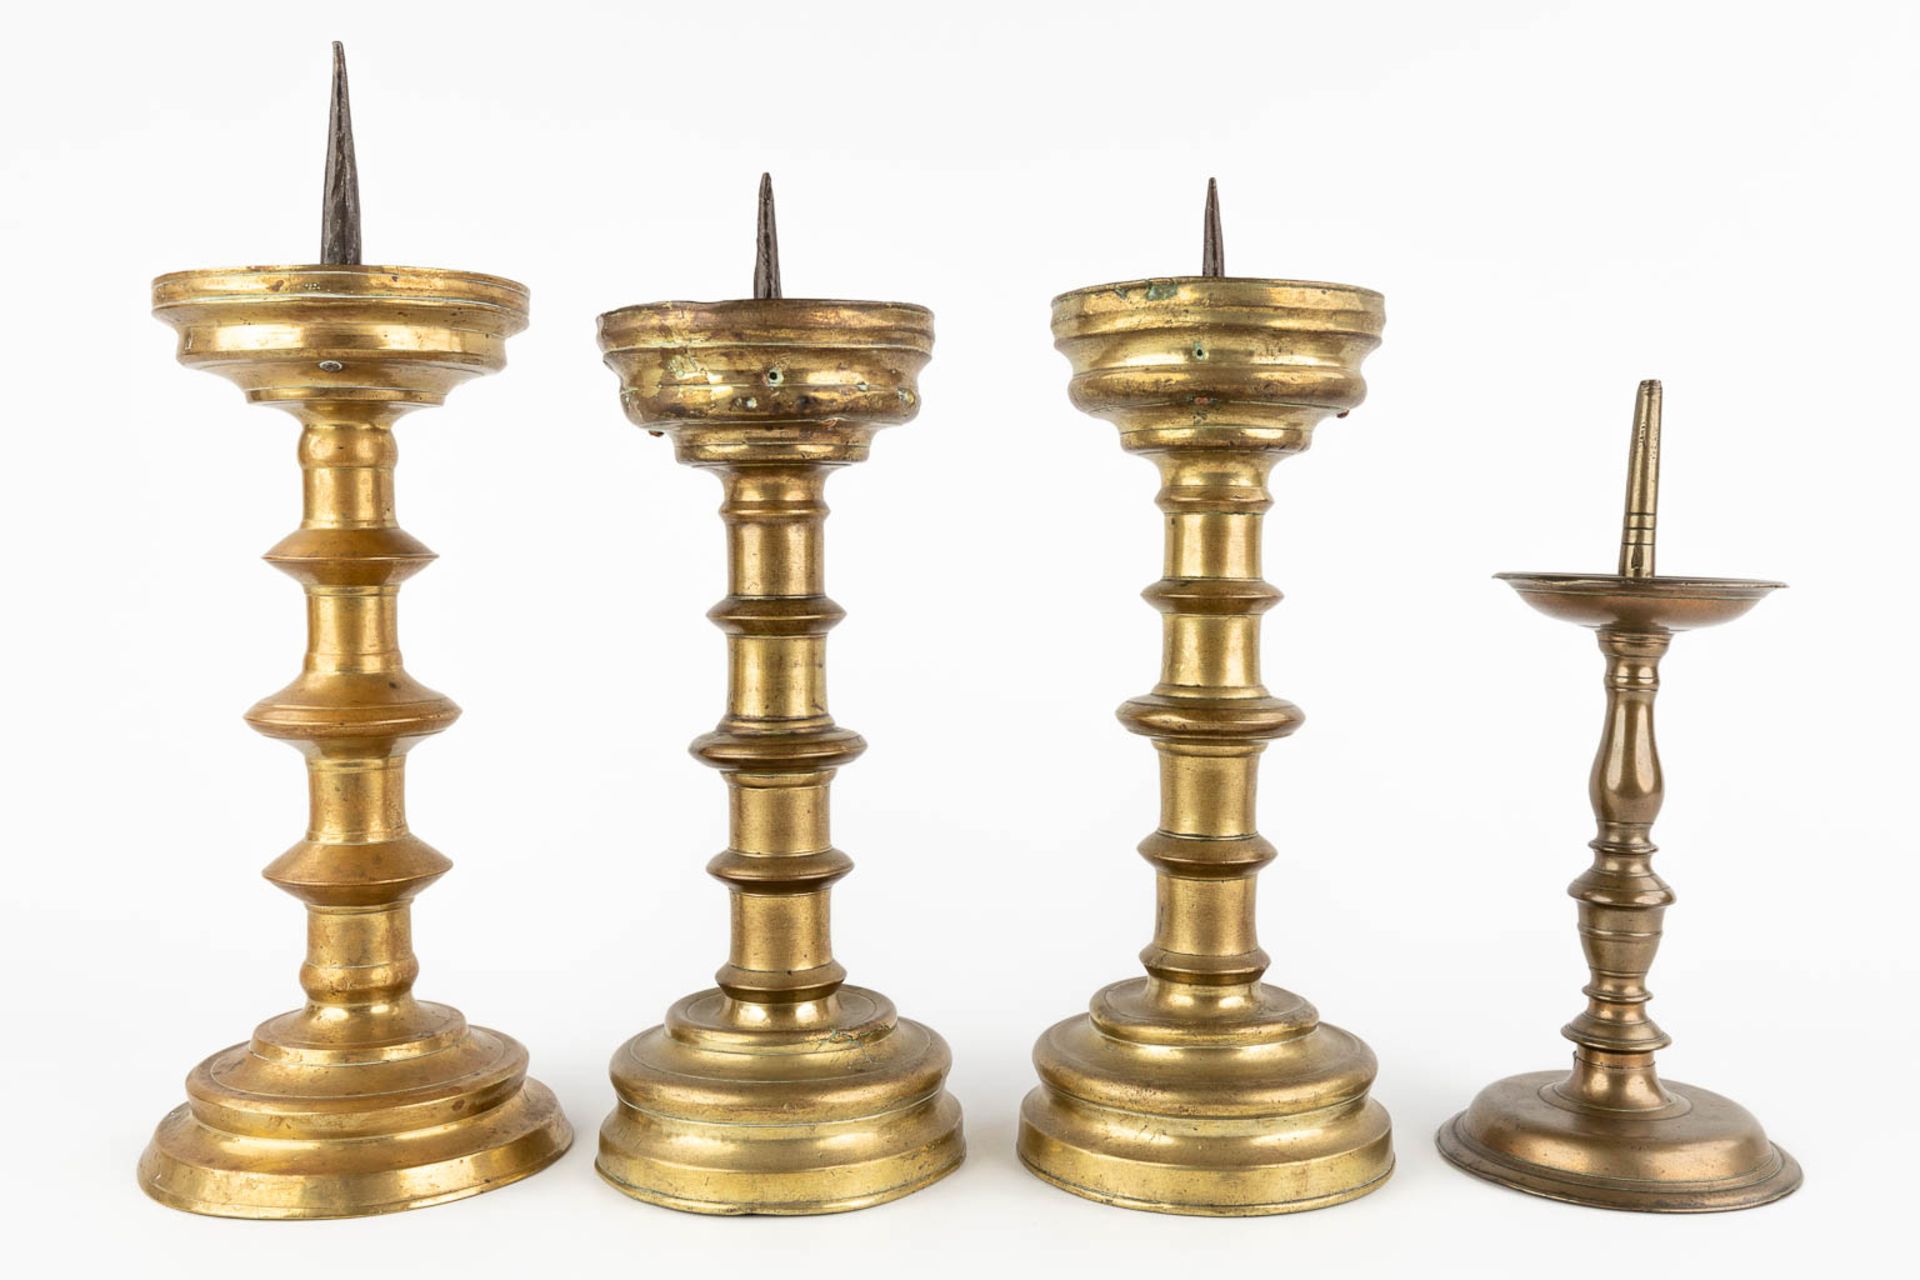 Four candlesticks, bronze, France and Germany, 17th-18th C. (H:36 x D:14 cm) - Bild 3 aus 11